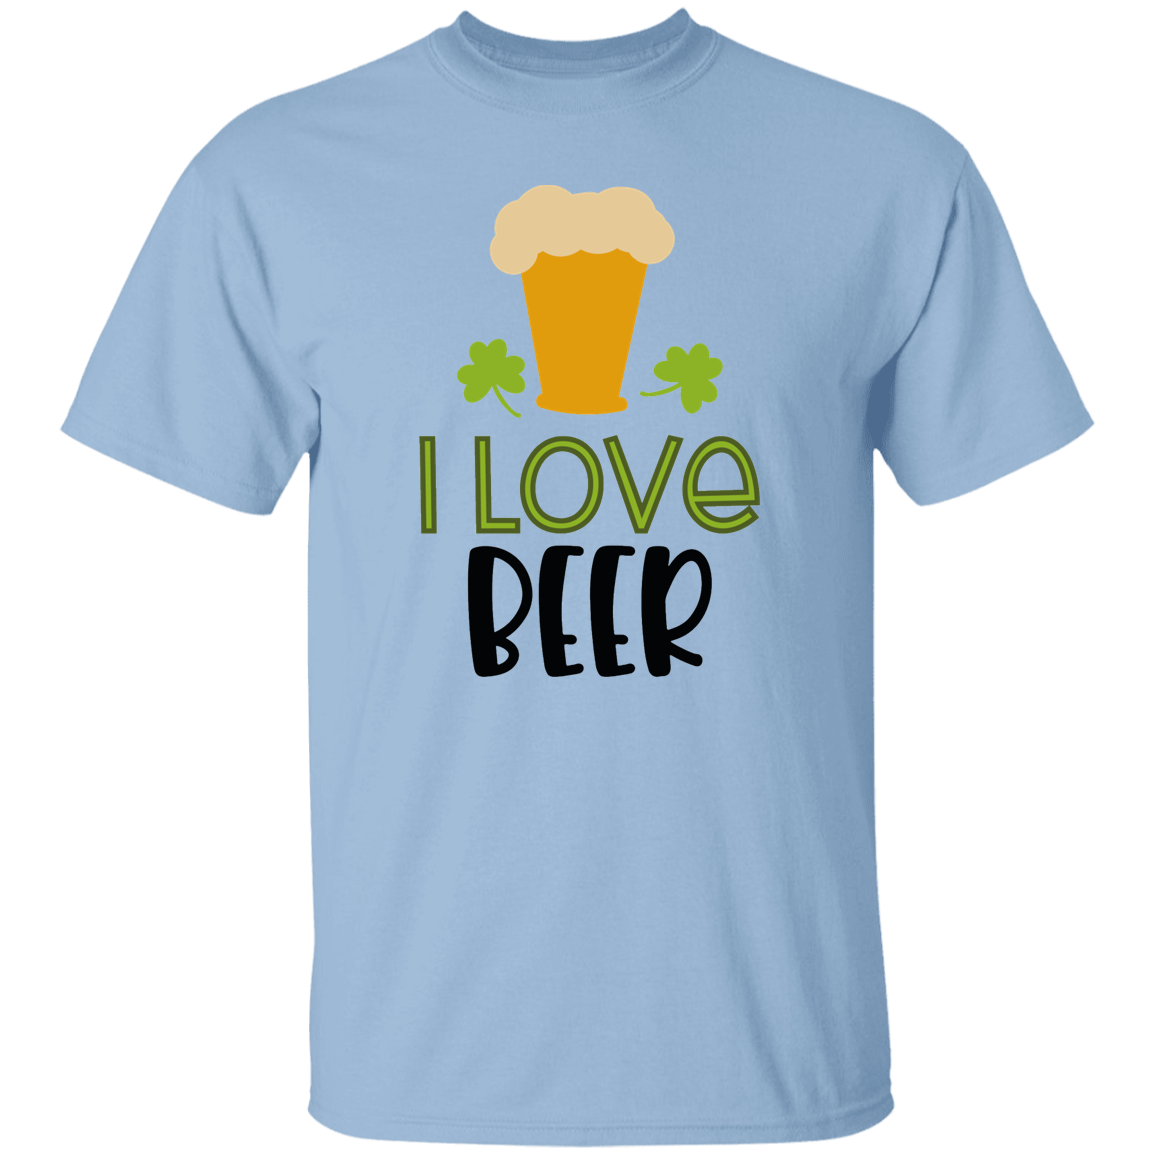 Beer 5.3 oz. T-Shirt